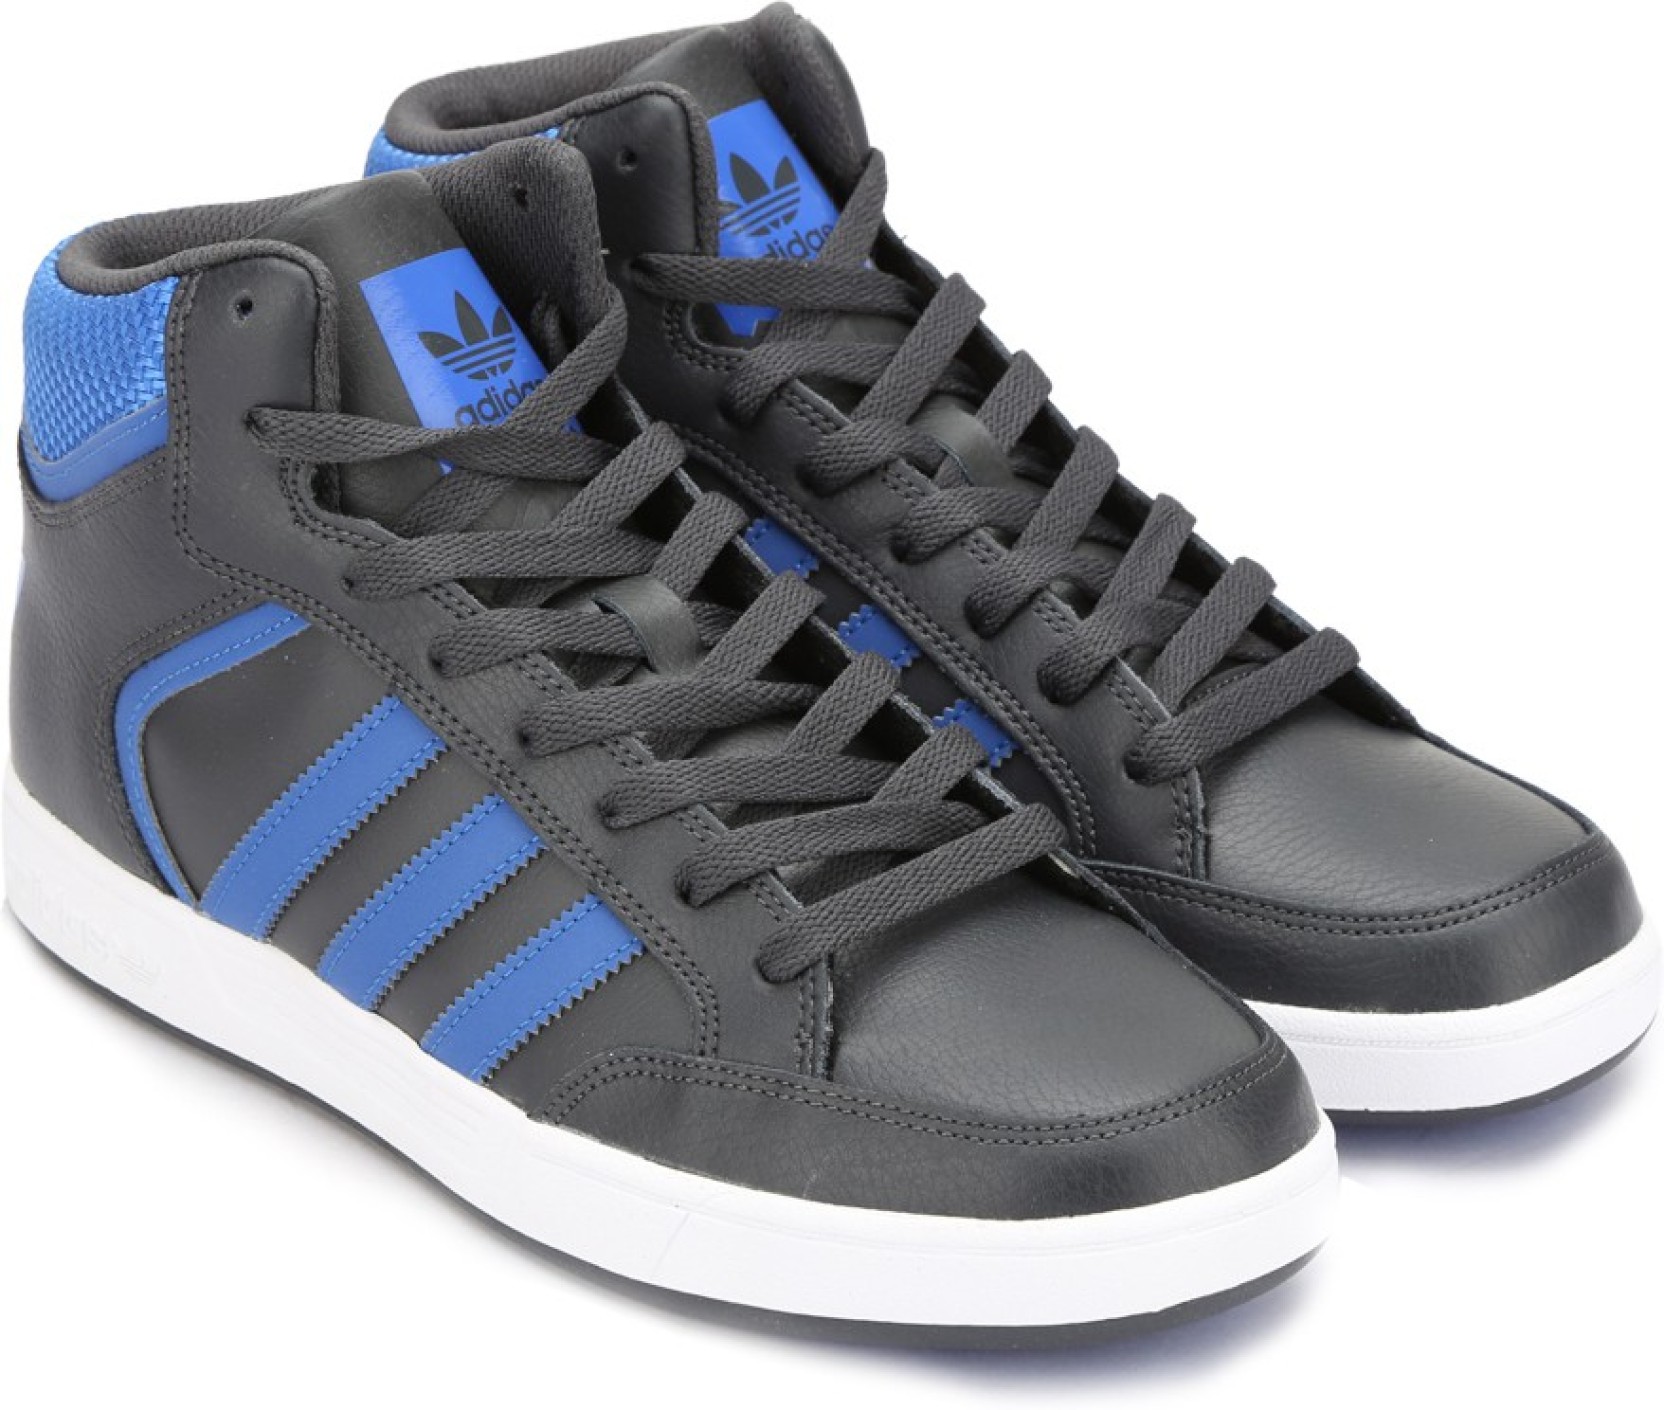  Adidas  Originals  VARIAL MID Sneakers Buy DGSOGR BLUE 